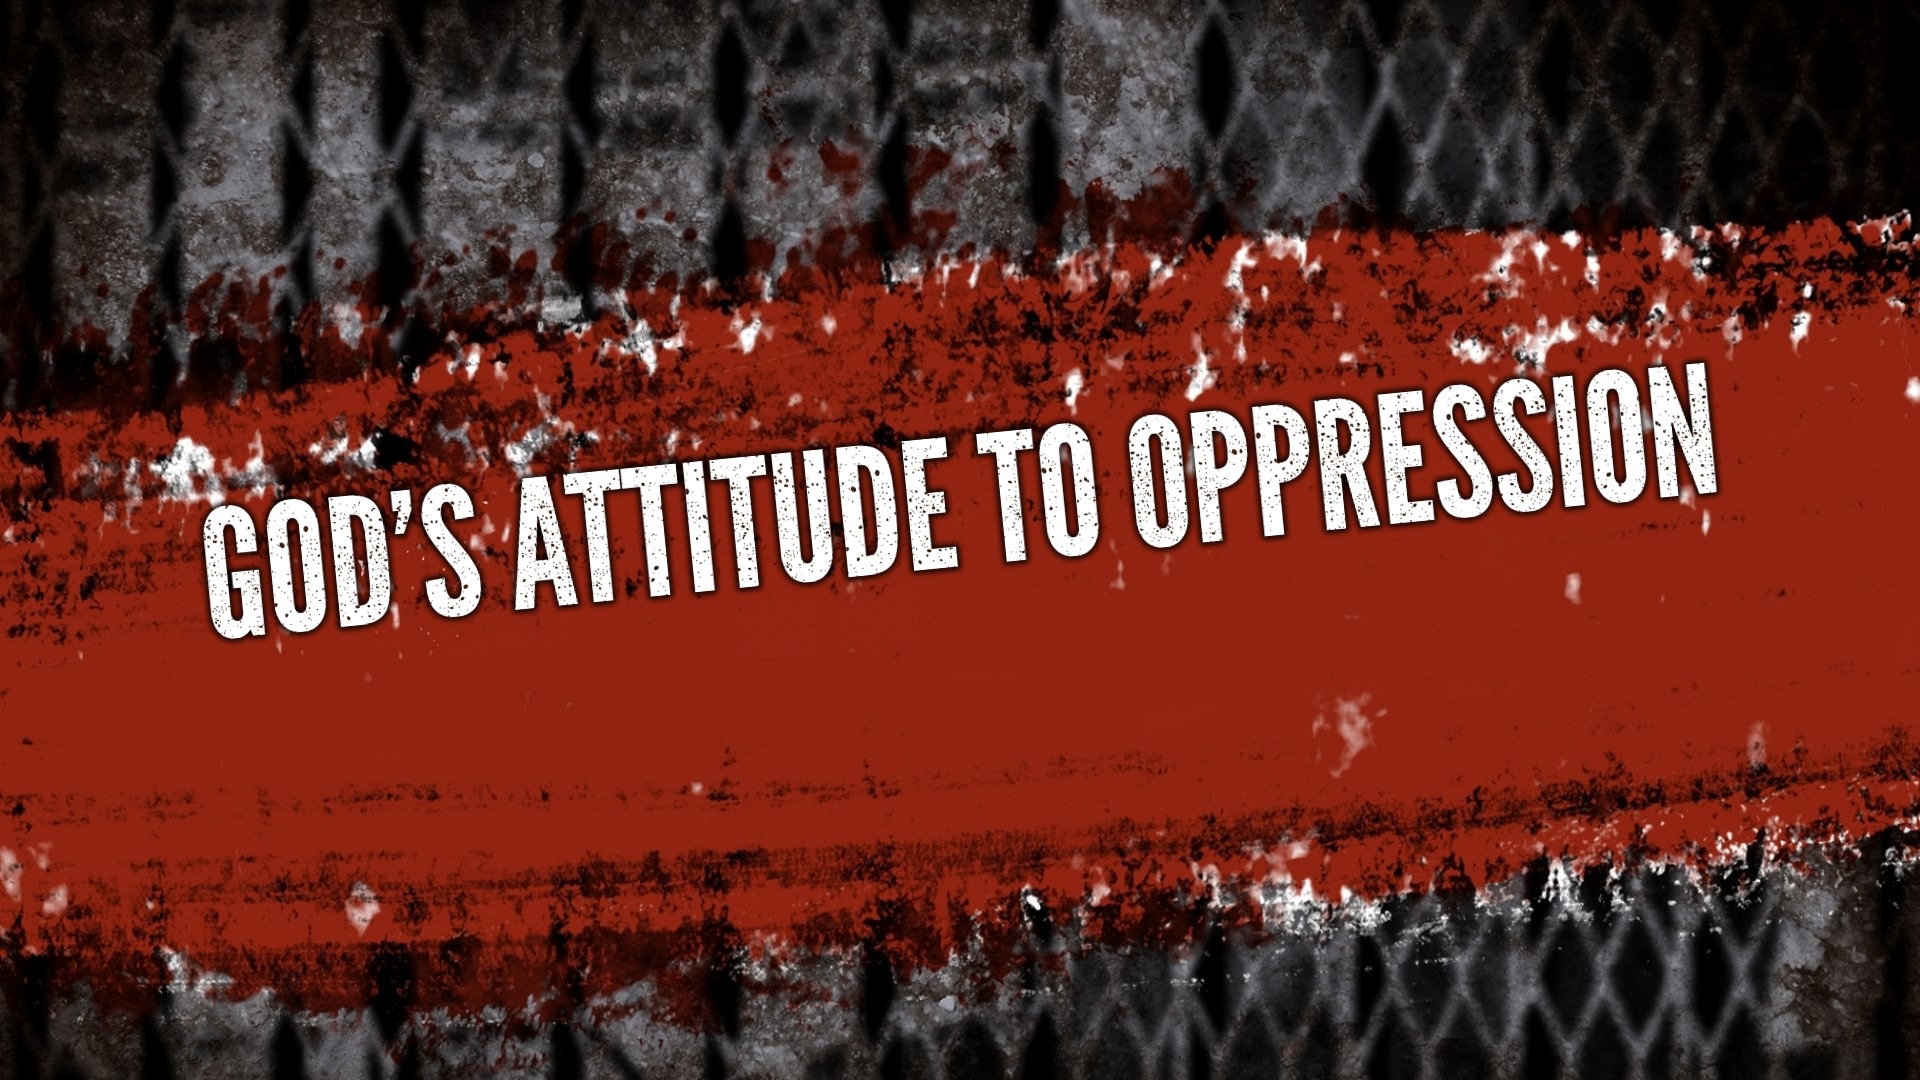 God’s attitude to oppression